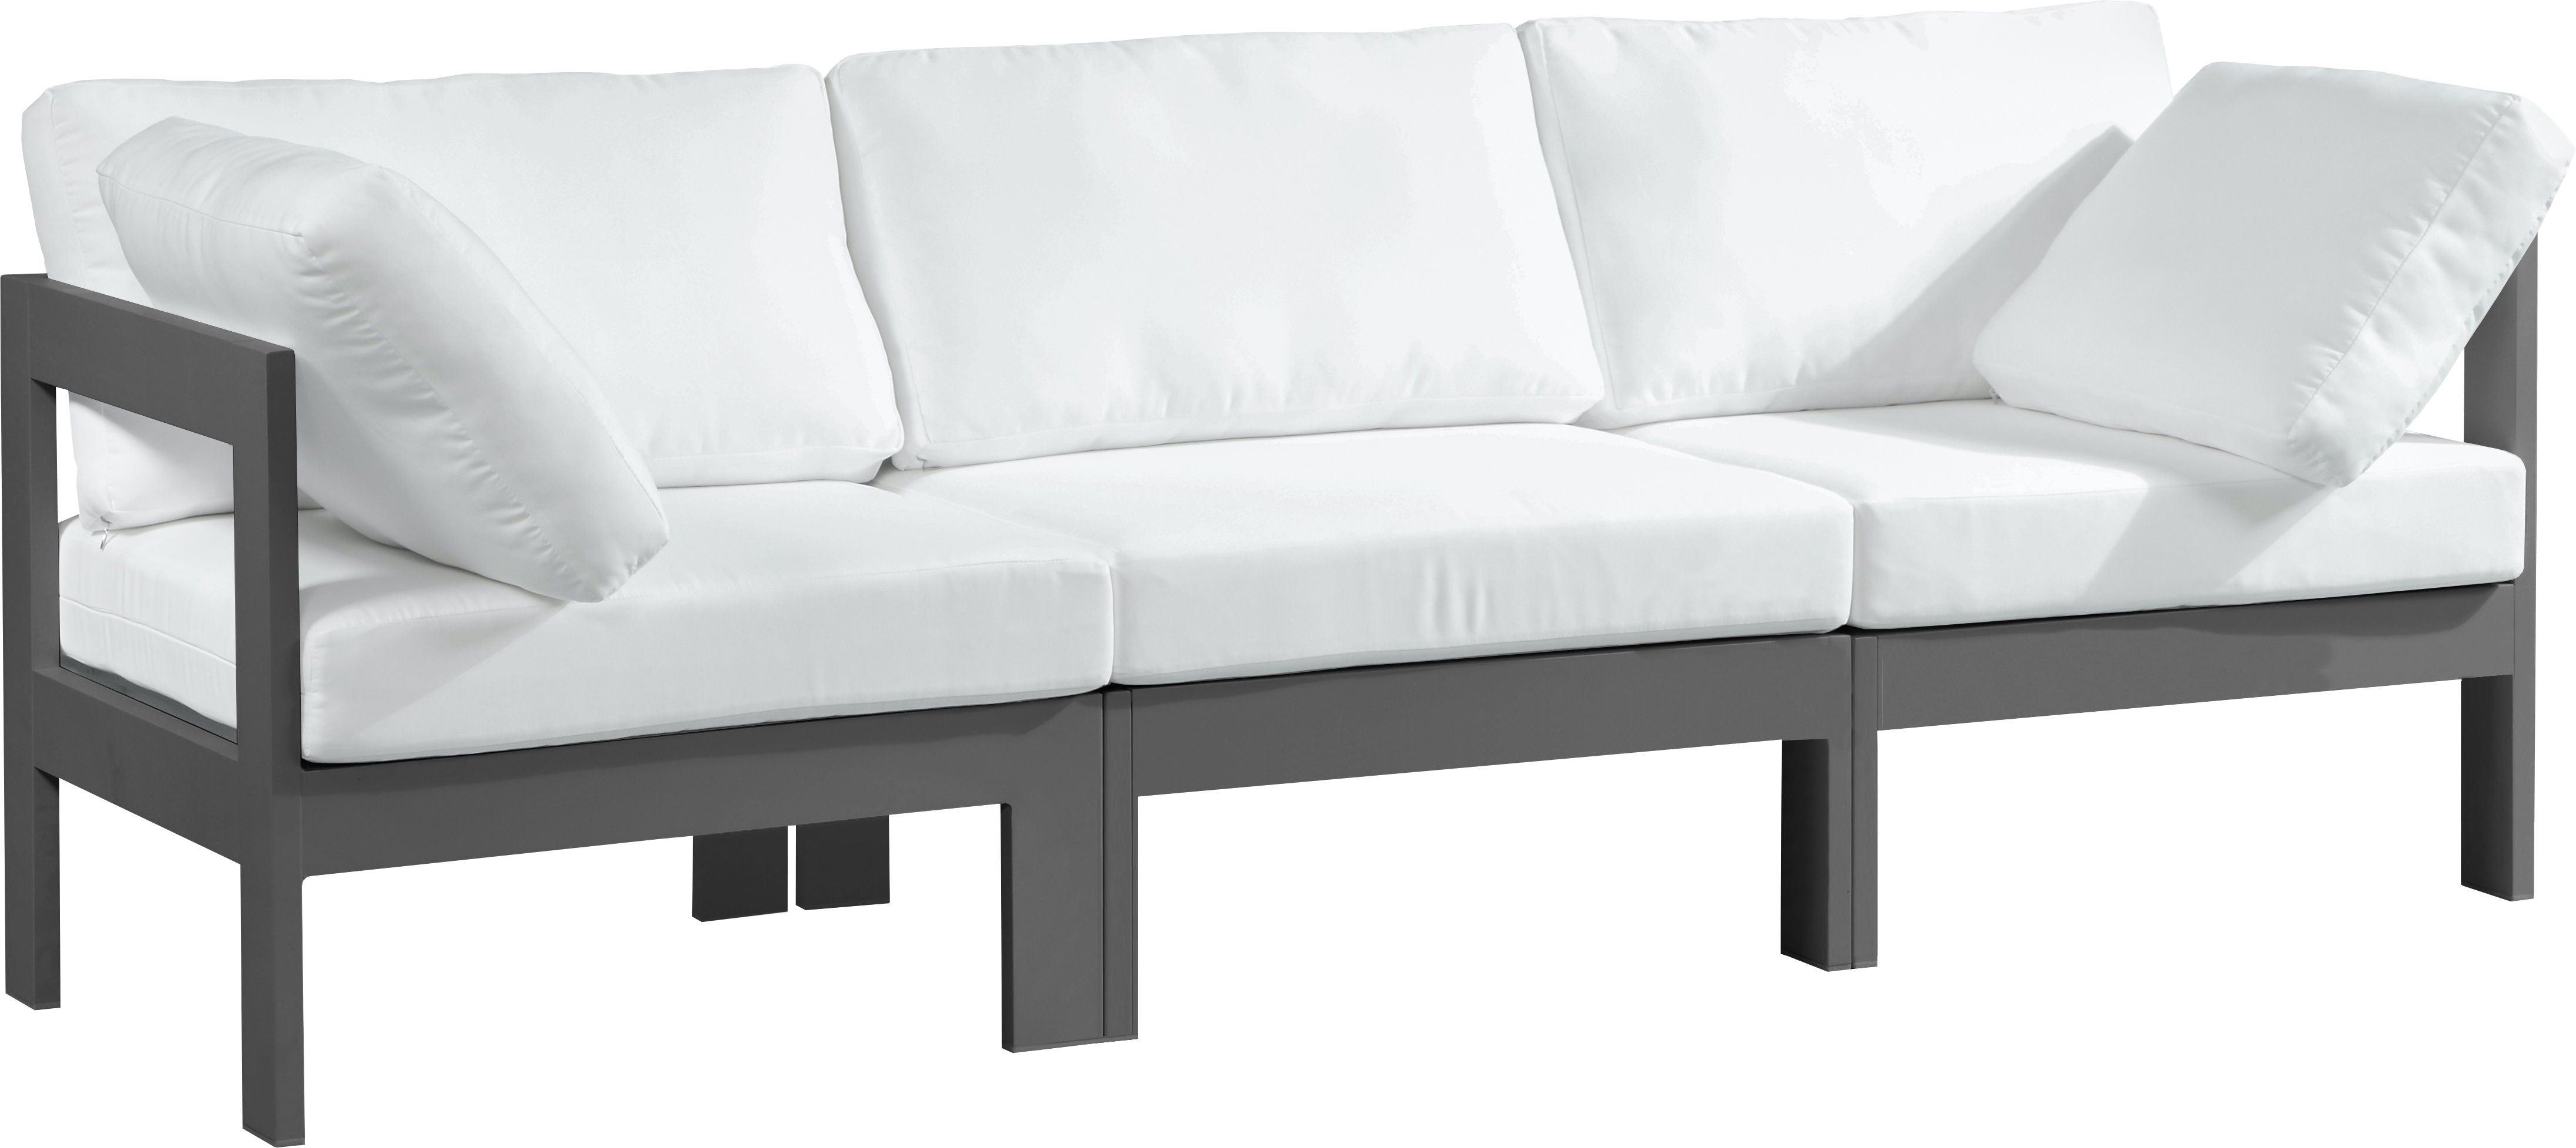 Meridian Furniture - Nizuc - Outdoor Patio Modular Sofa 3 Seats - White - 5th Avenue Furniture